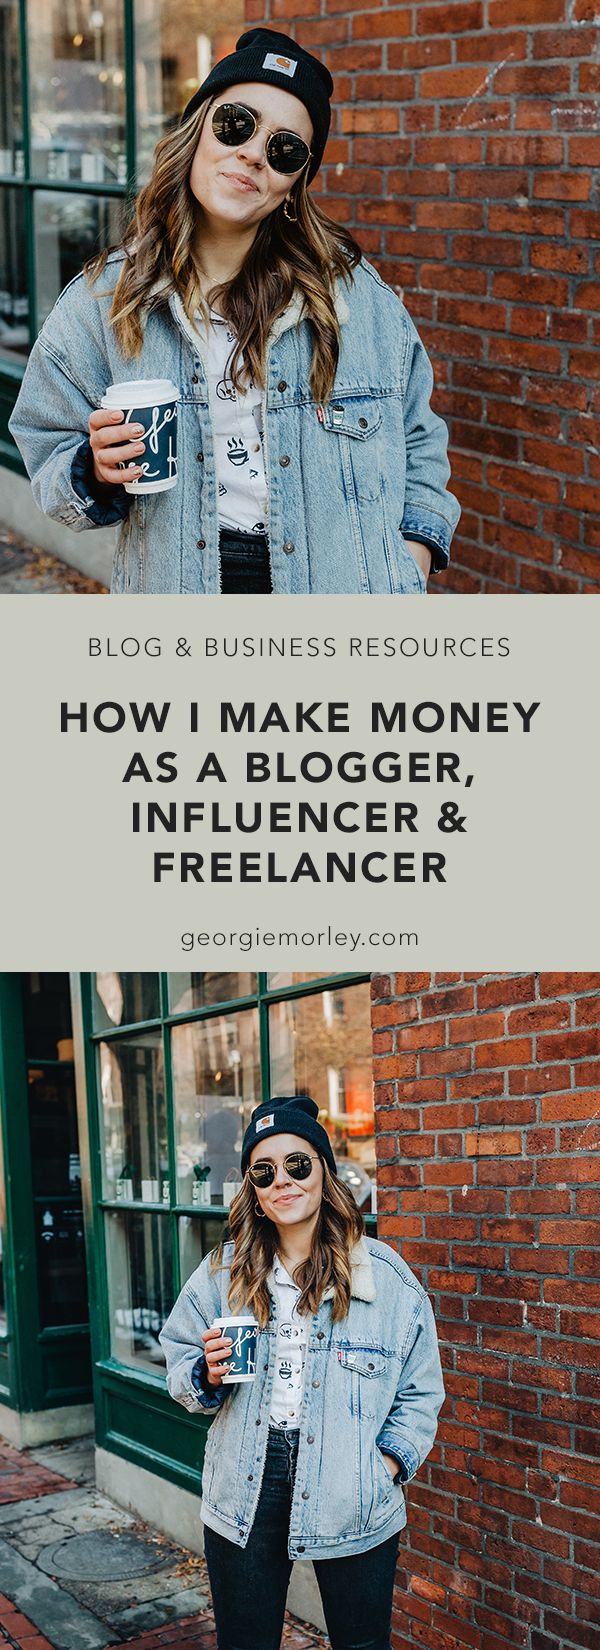 How to Make Money as an Influencer